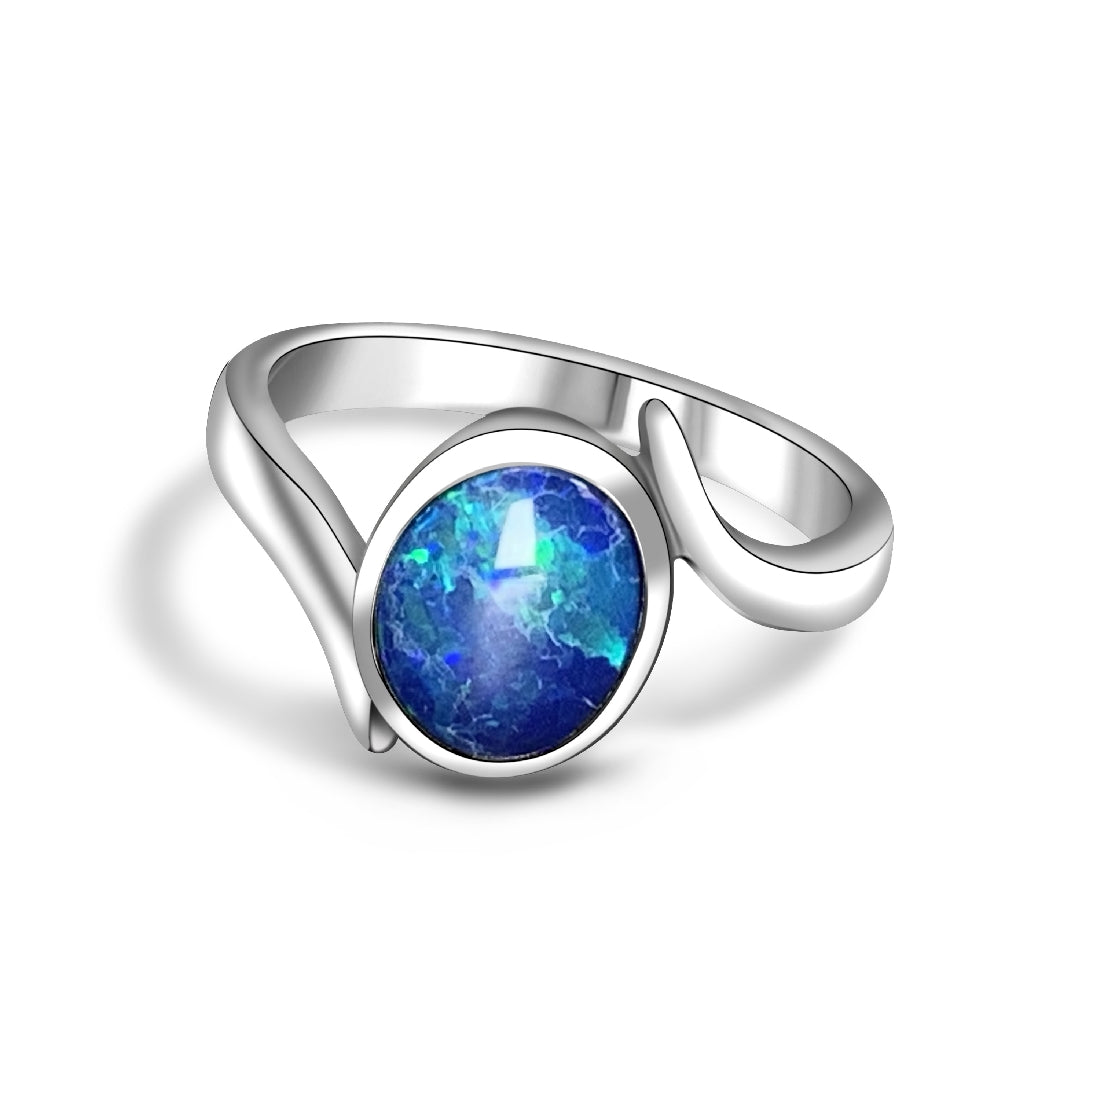 Sterling Silver solitaire Black Opal 1.12ct doublet ring bezel set - Masterpiece Jewellery Opal & Gems Sydney Australia | Online Shop